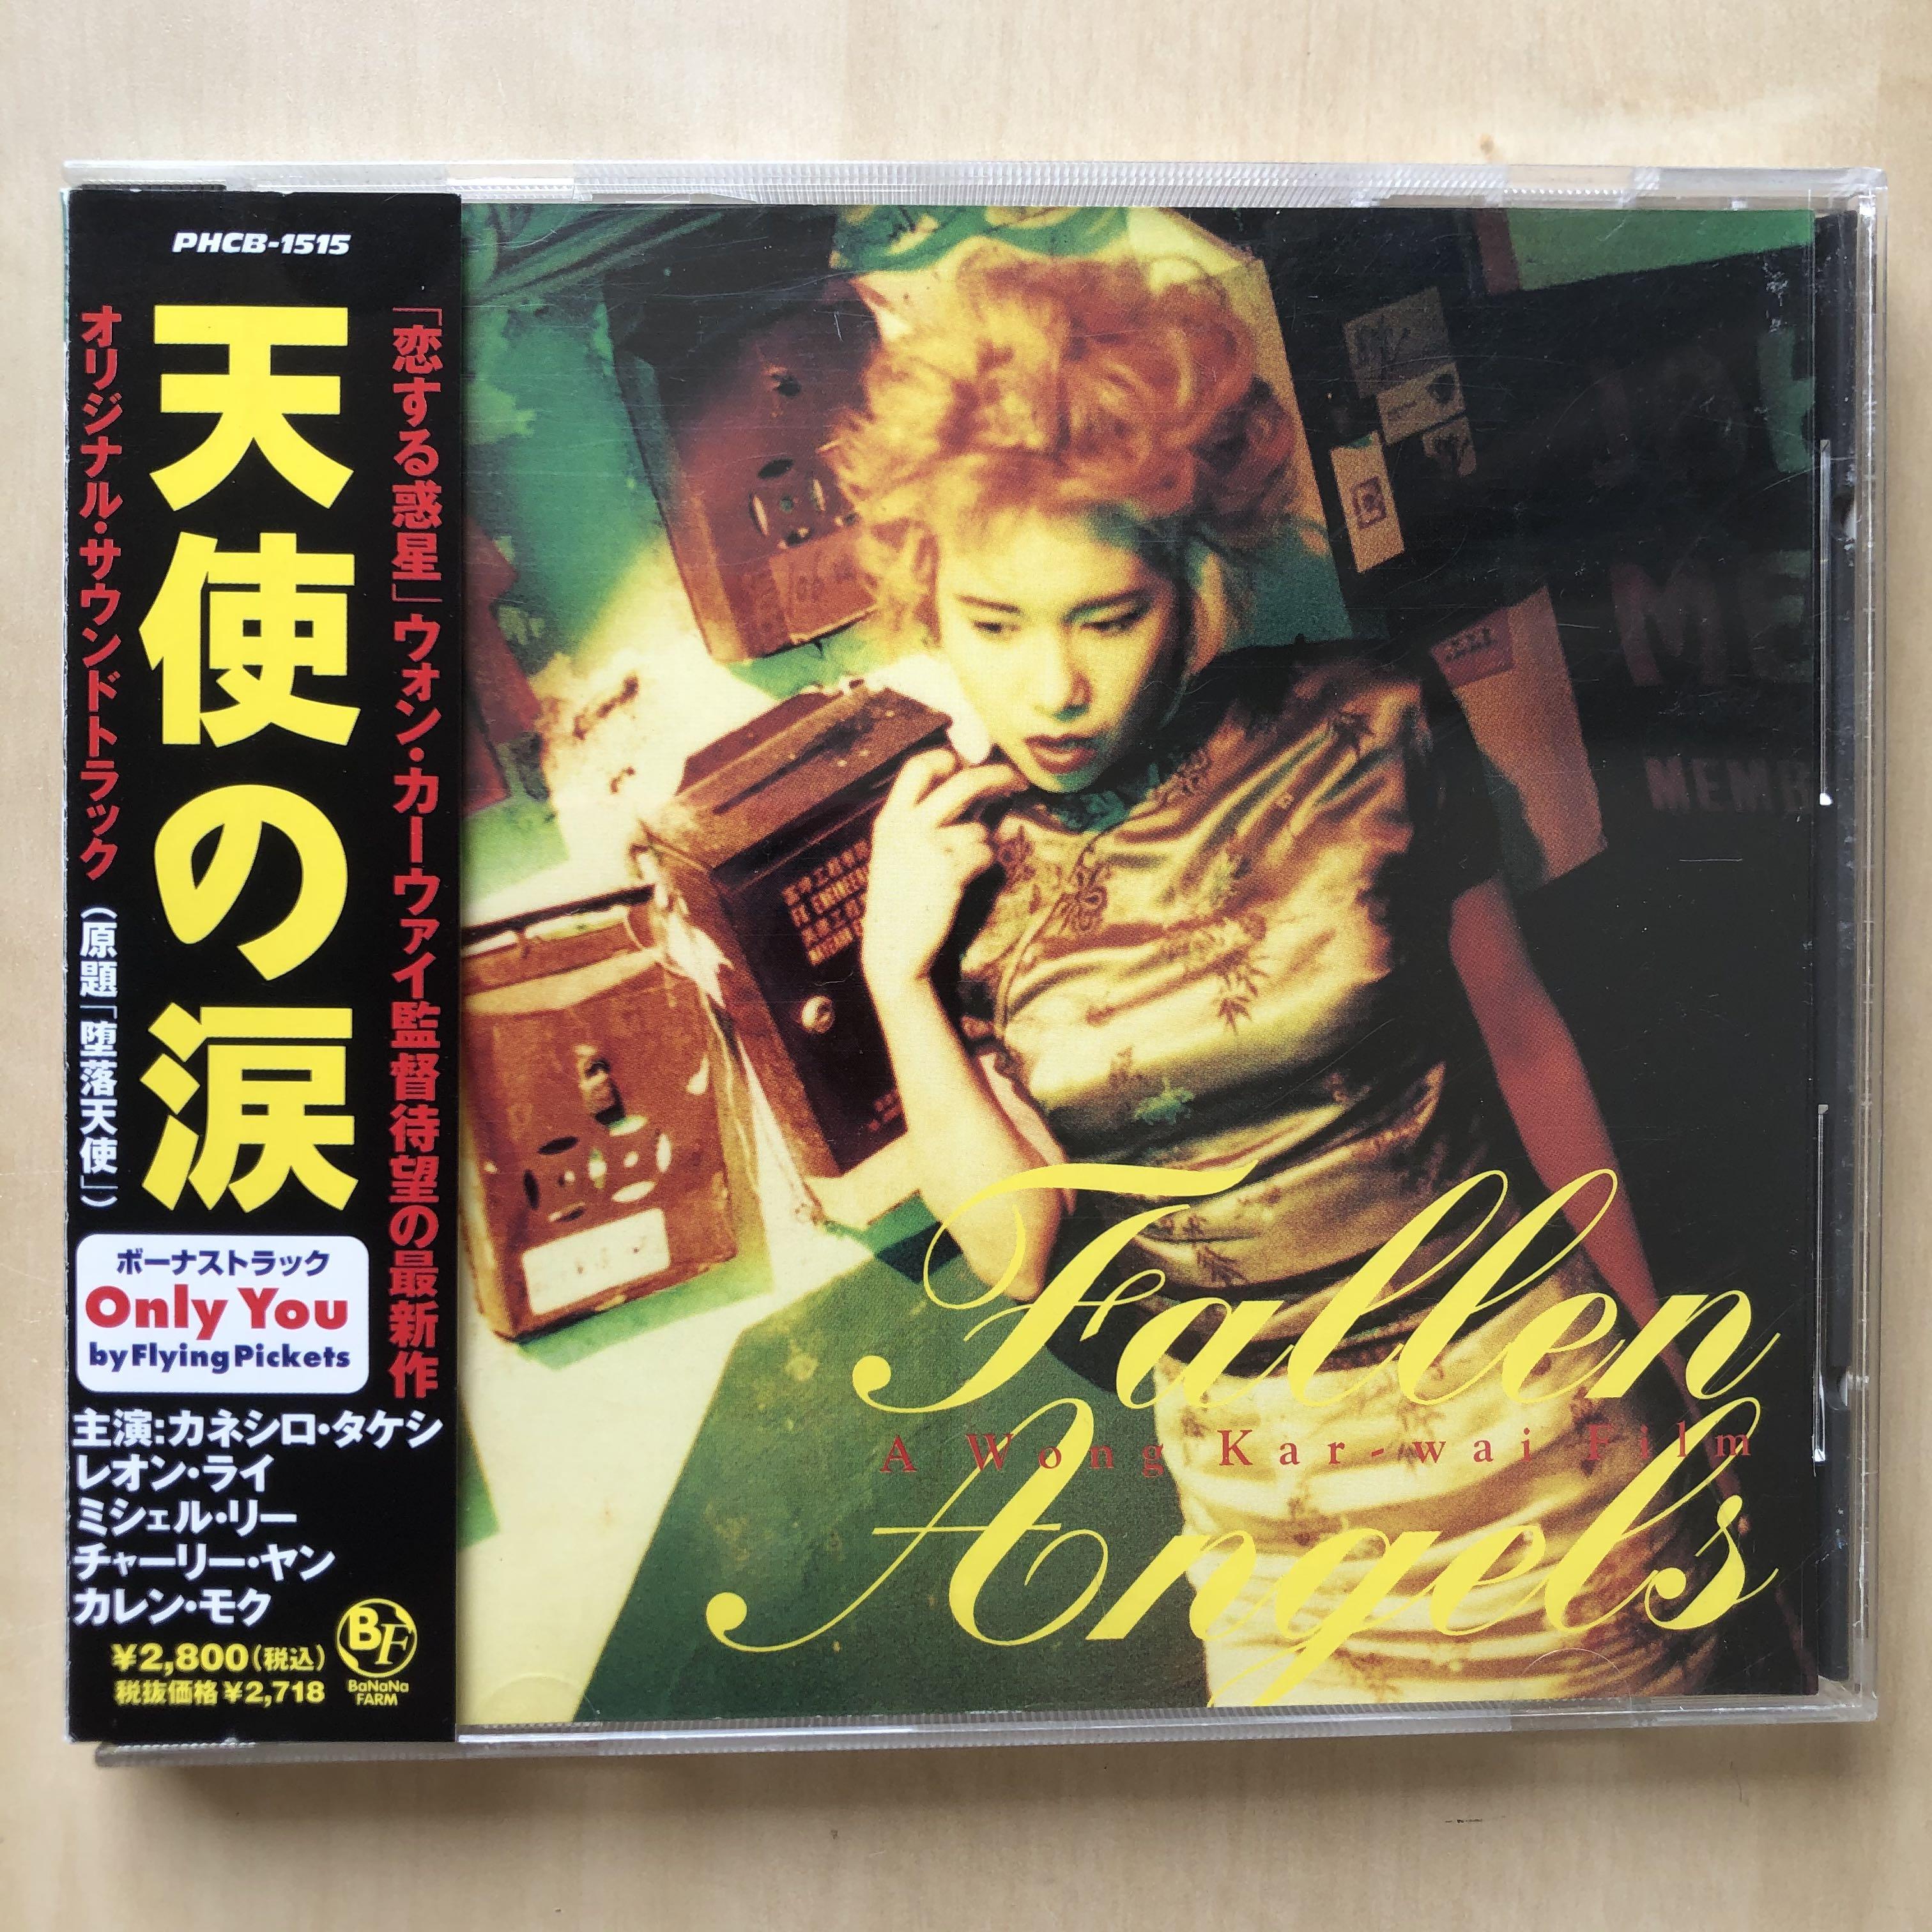 CD丨天使之淚/ 墮落天使電影原聲大碟日本版, 興趣及遊戲, 音樂、樂器